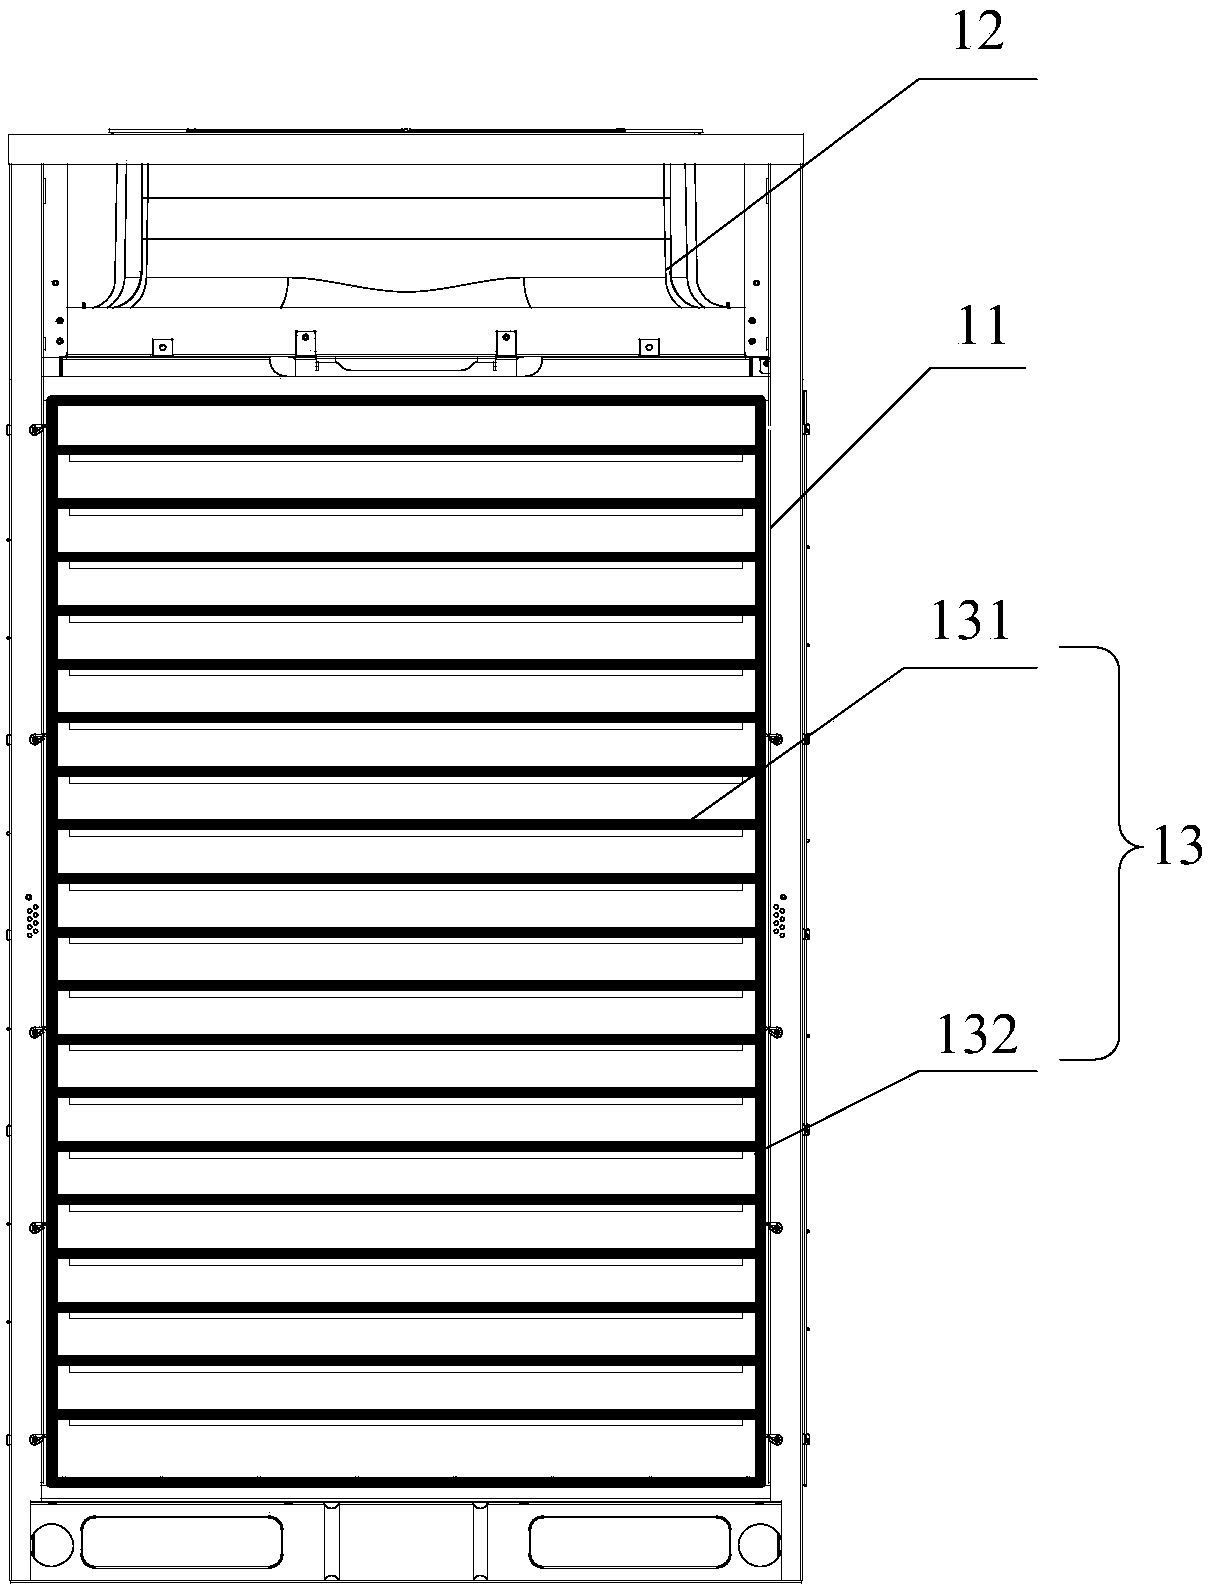 Air conditioner outdoor unit